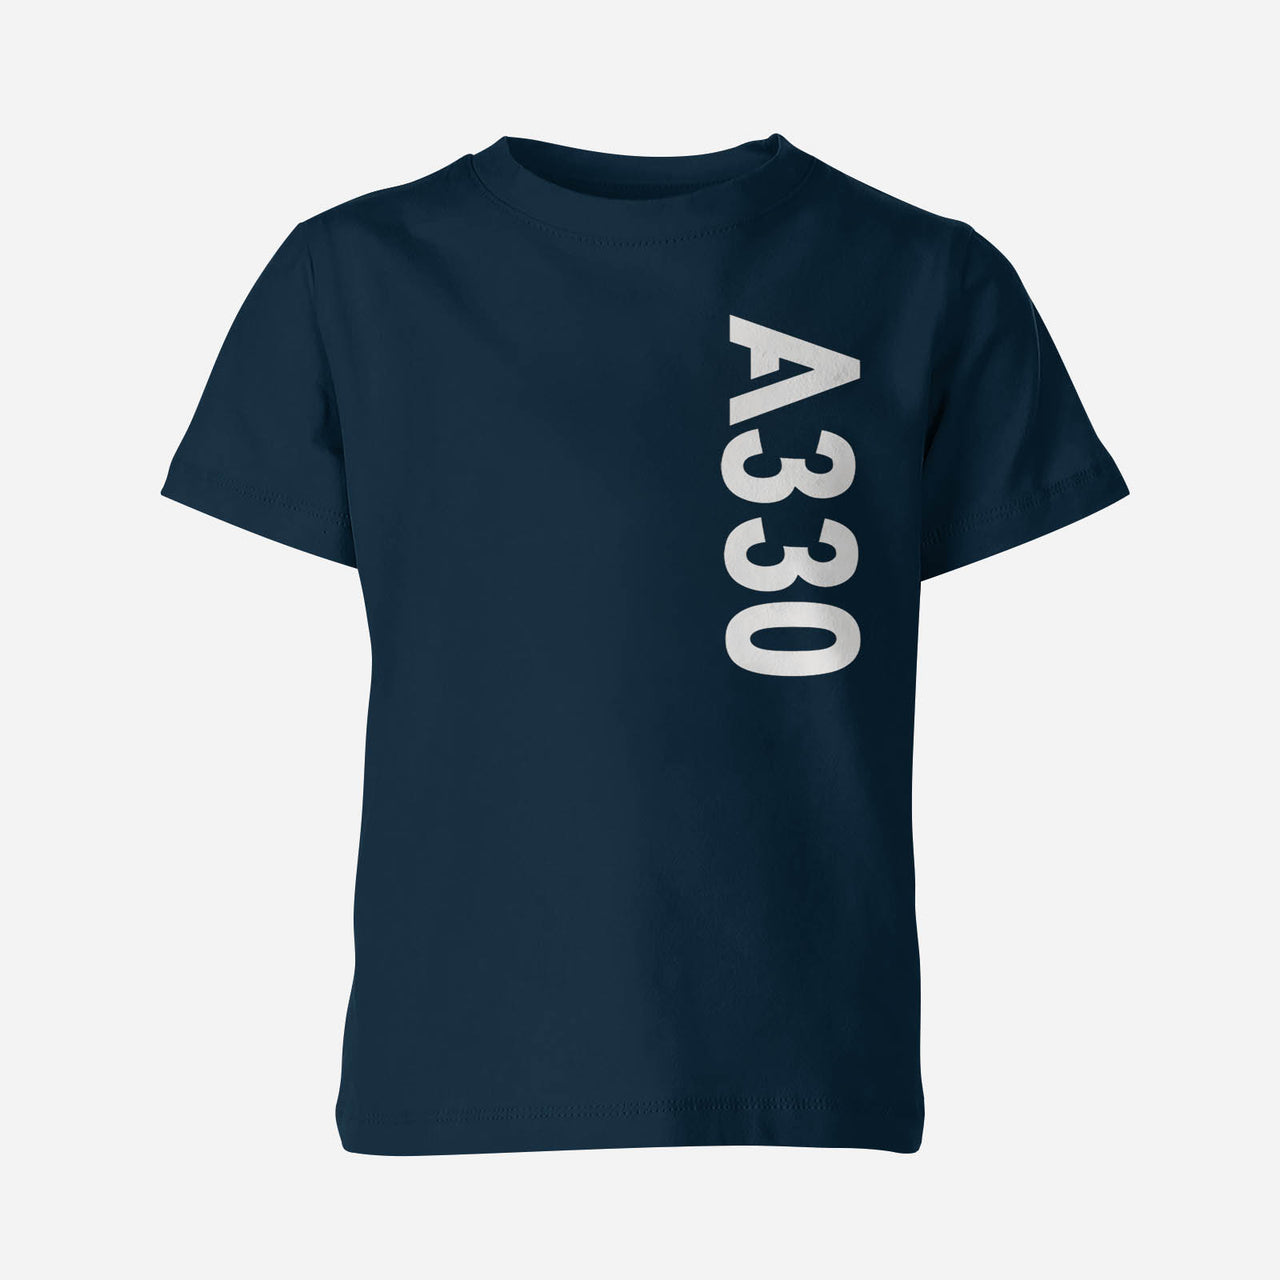 A330 Side Text Designed Children T-Shirts